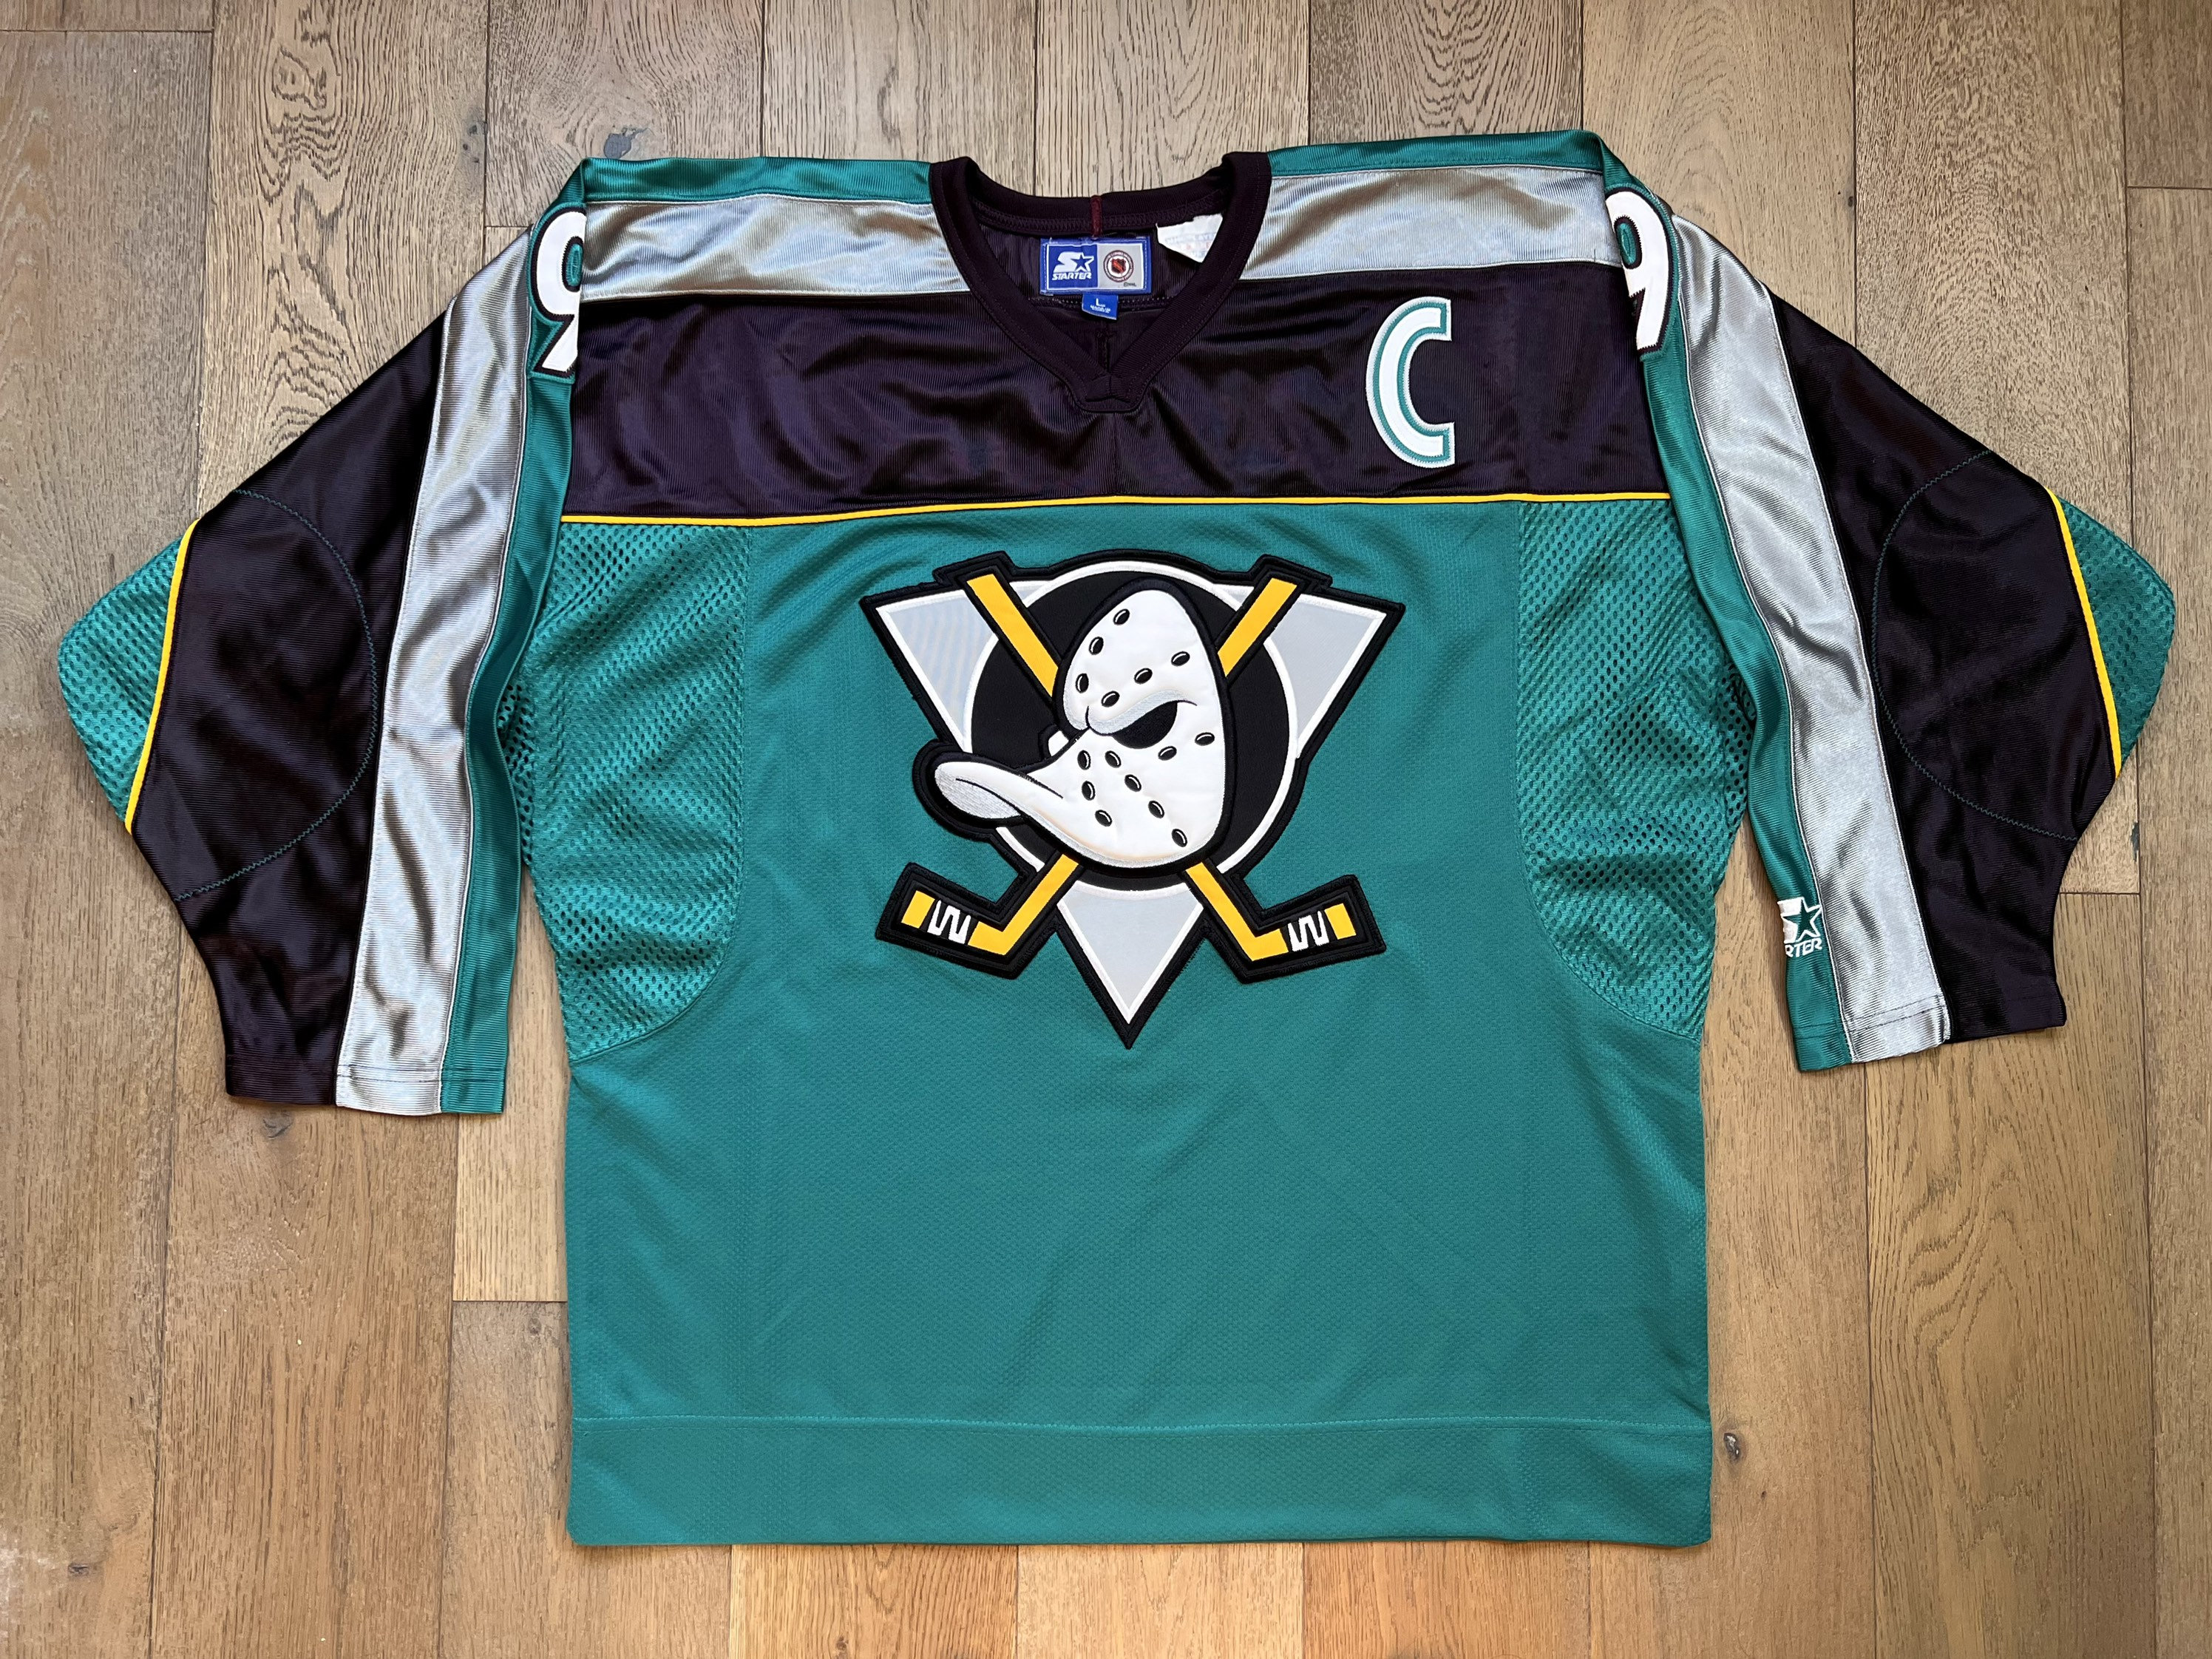 90's Paul Kariya Anaheim Mighty Ducks Starter NHL Alternate Jersey